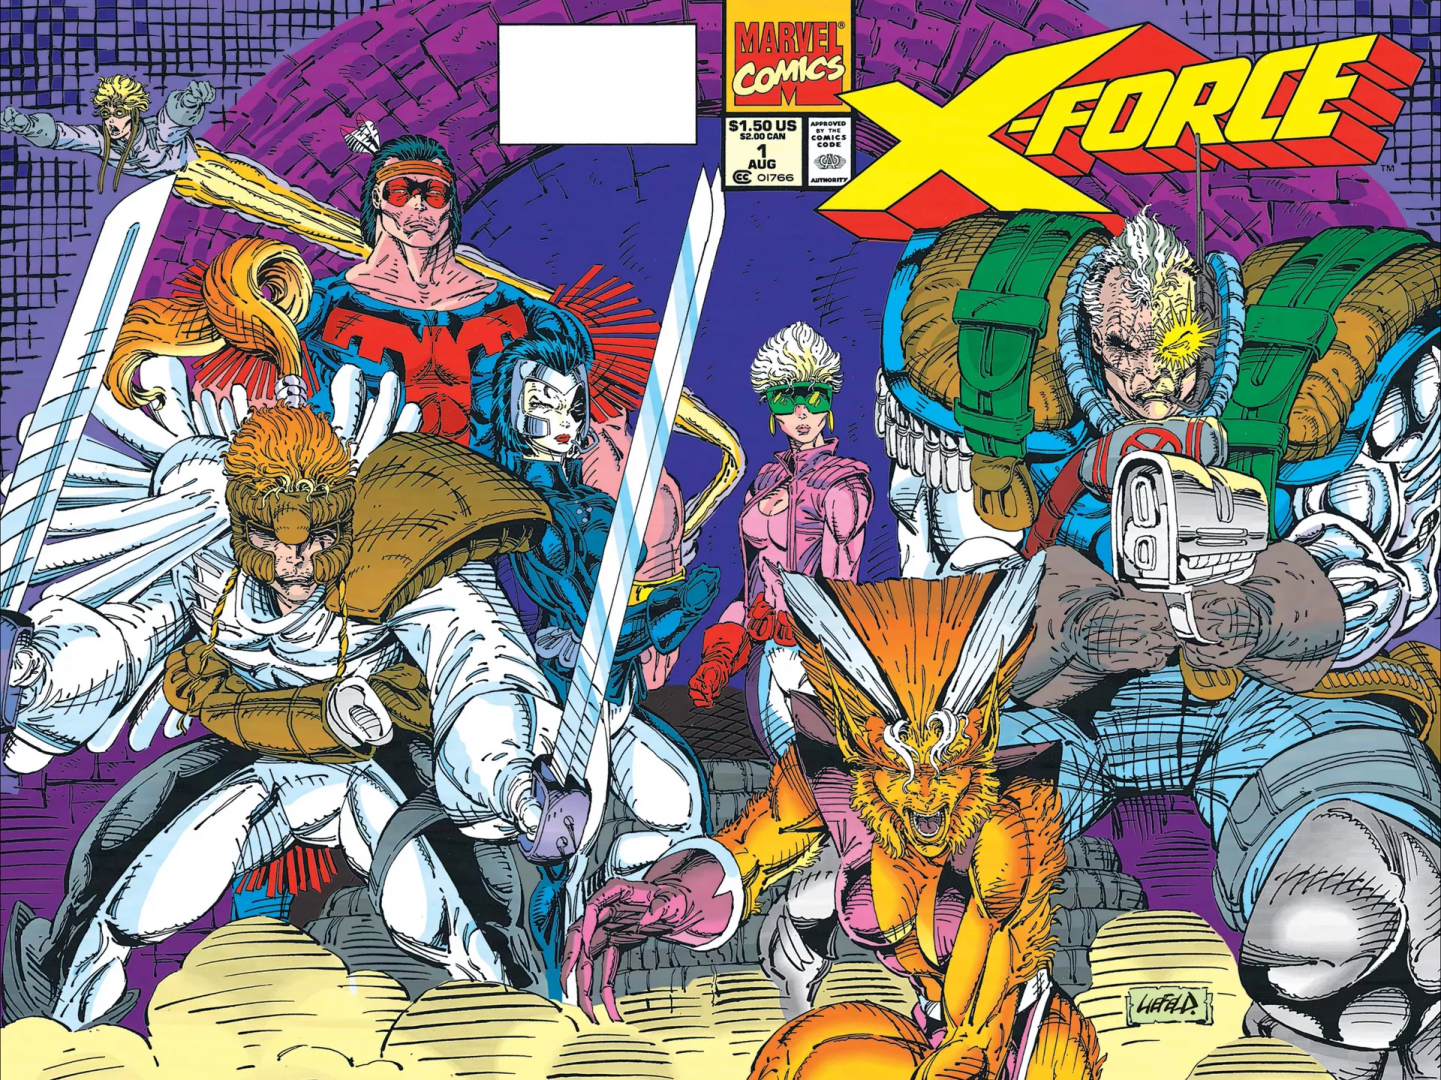 Marvel Crisis Protocol Affiliation Spotlight: X-FORCE!!!